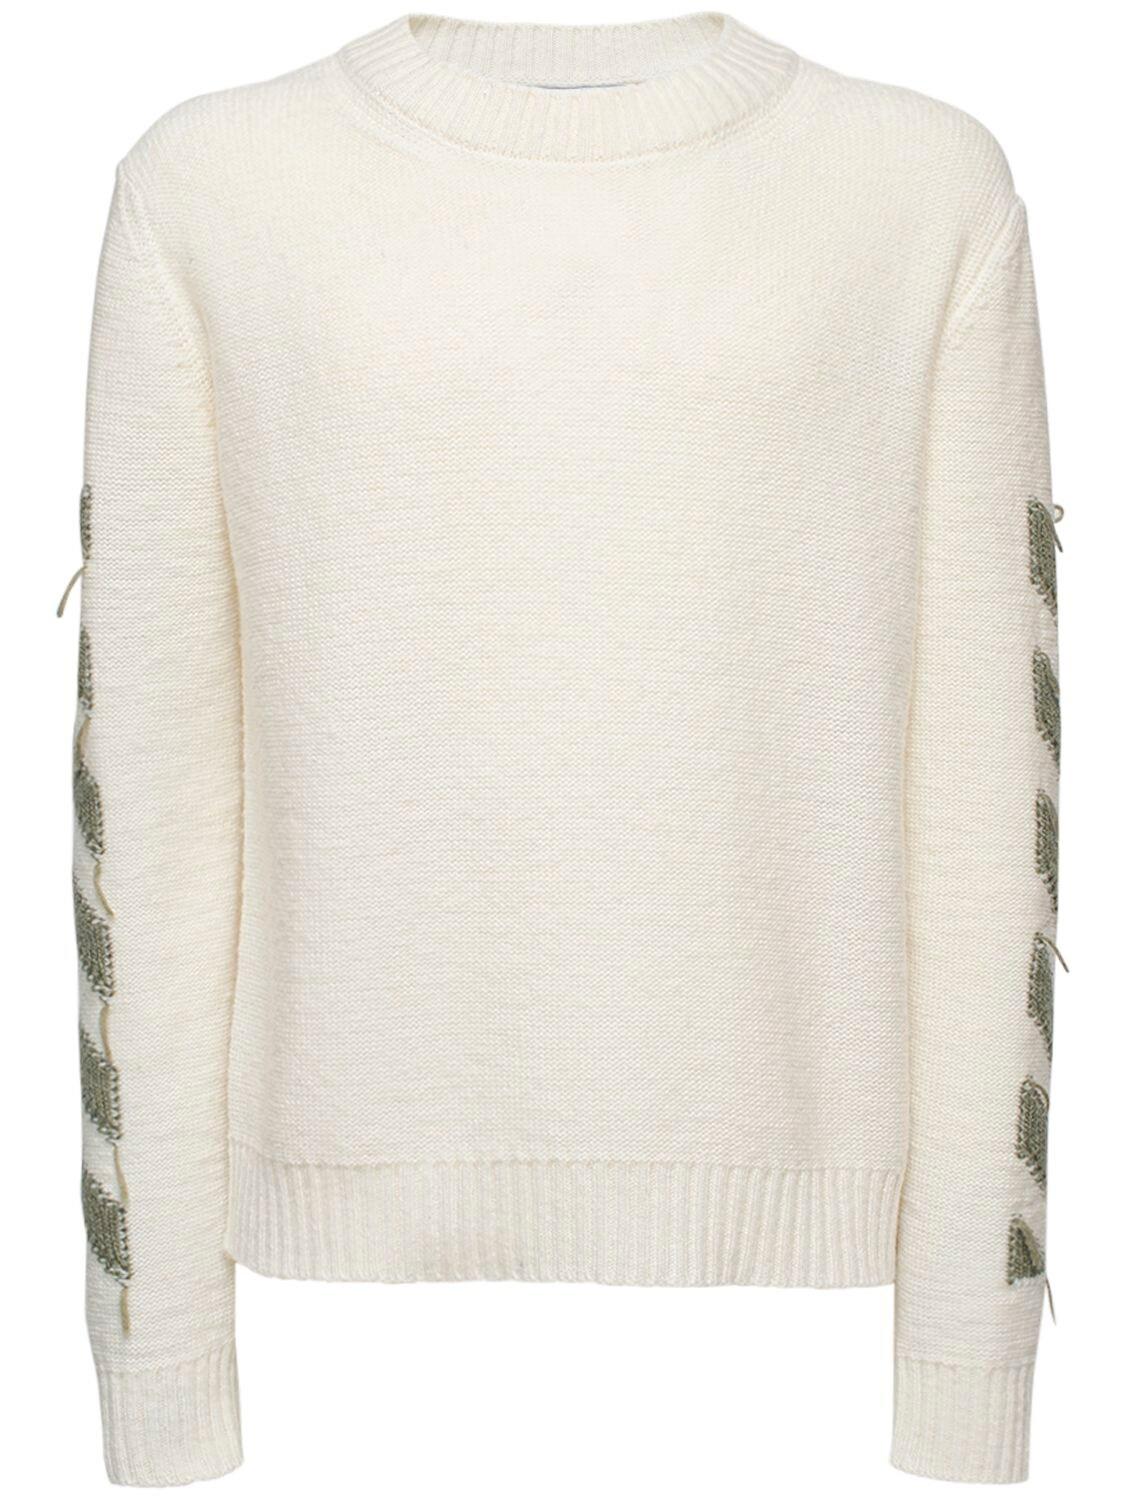 Off-White c/o Virgil Abloh Reverse Arrow Diag Knit Sweater for Men 